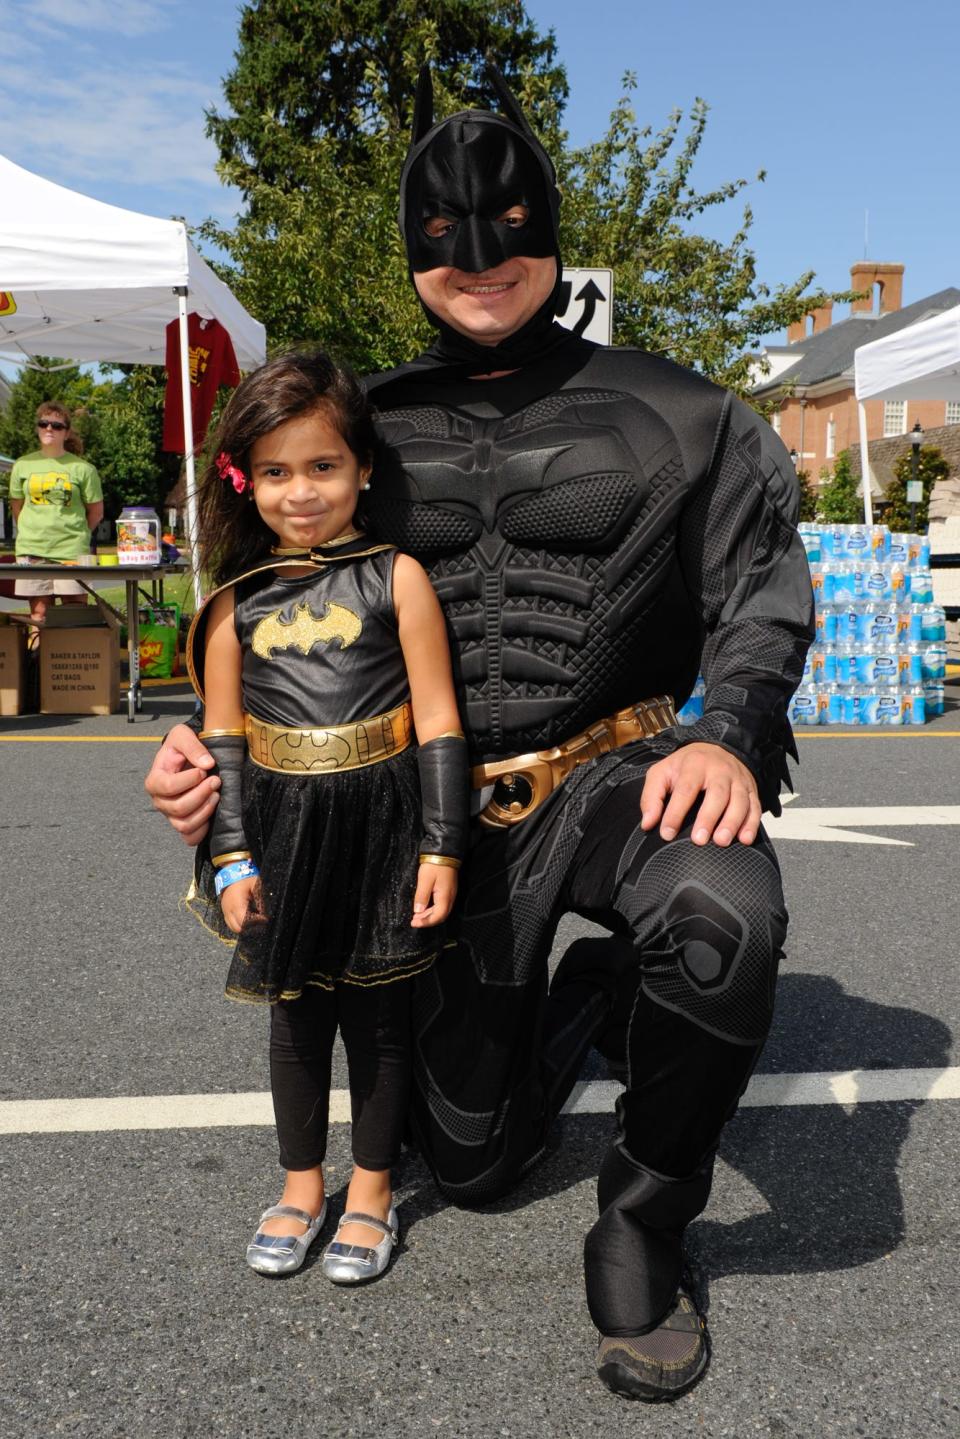 DOVER COMIC CON: Nelson Vasquez and his daughter Mia, 4, of Dover, dressed as Batman at the second annual Dover Comic Con, Aug. 8, 2015.